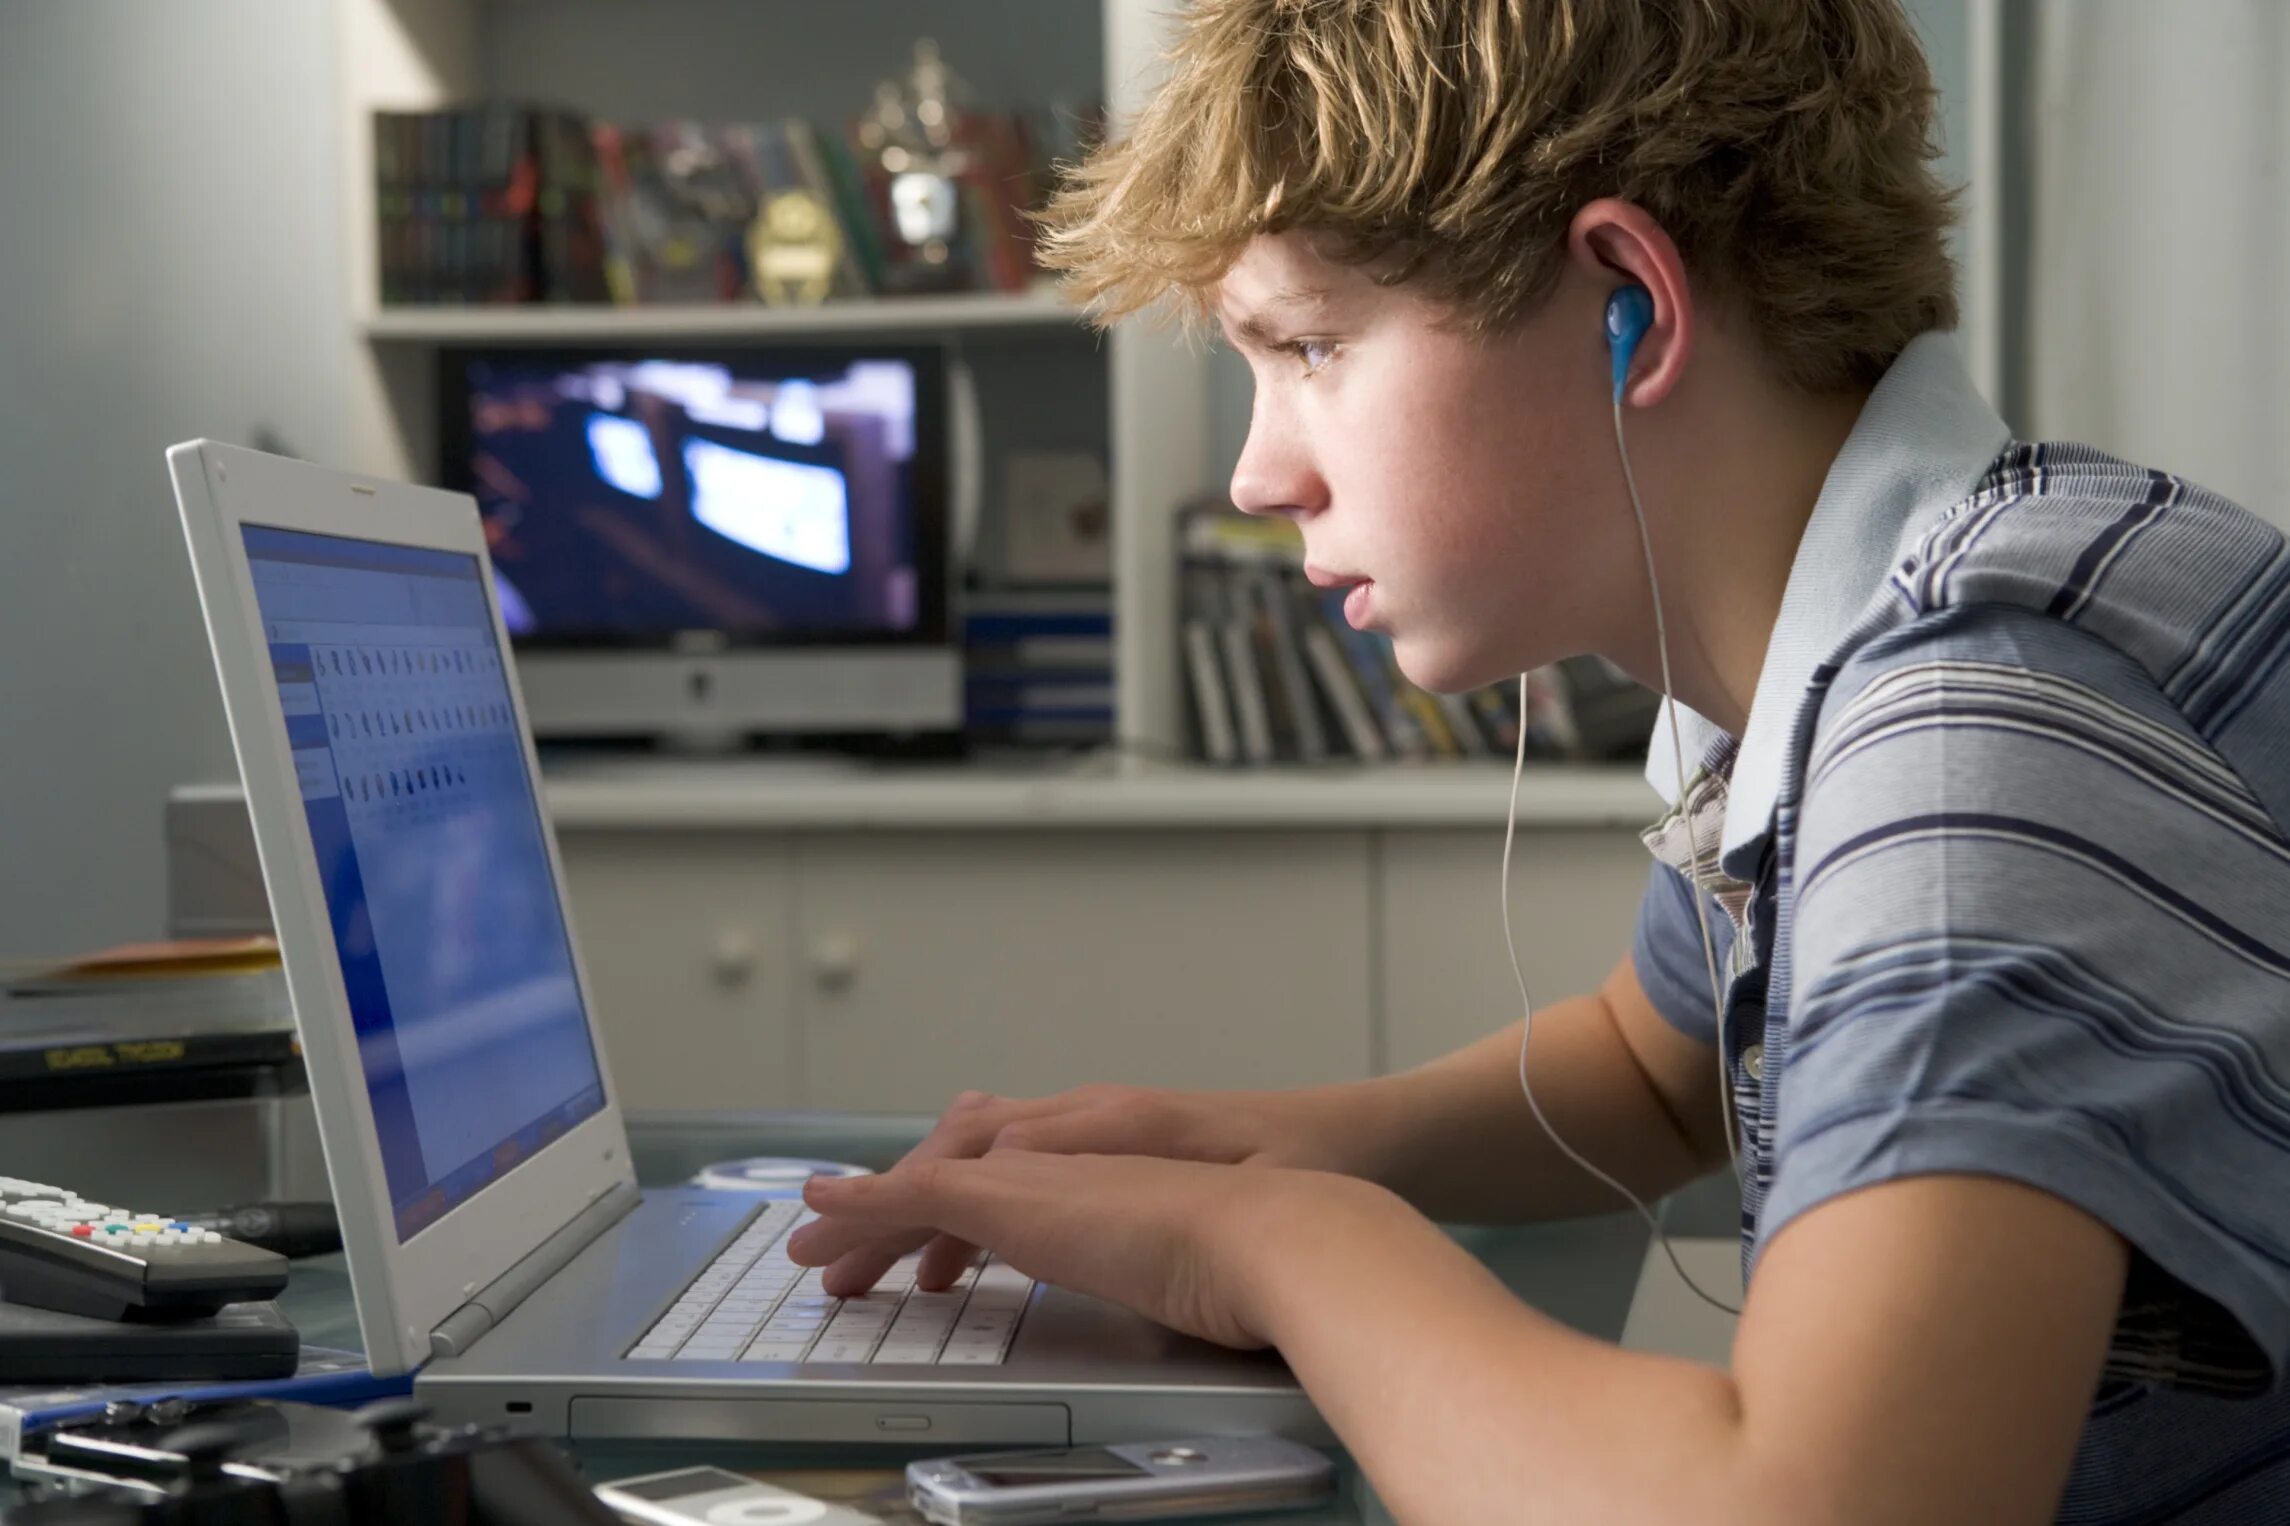 The tv programme teenagers. Подросток за компьютером. Подросток и компьютер. Подросток играющий в компьютер. Подросток и компьютерная зависимость.